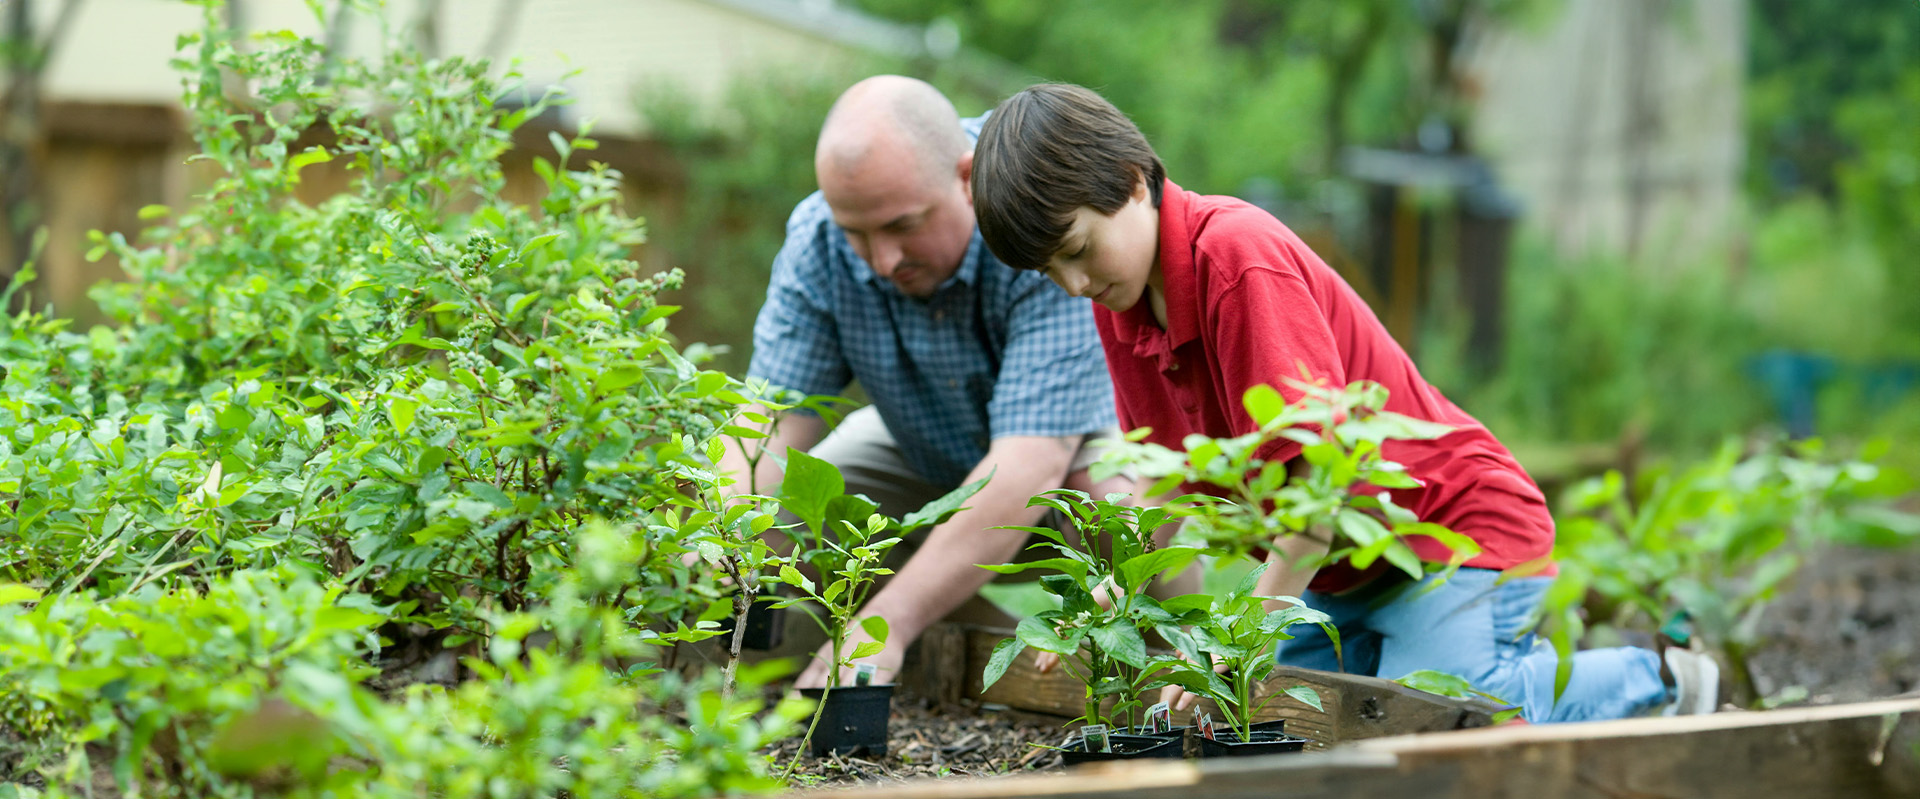 Kid Gardening with Dad